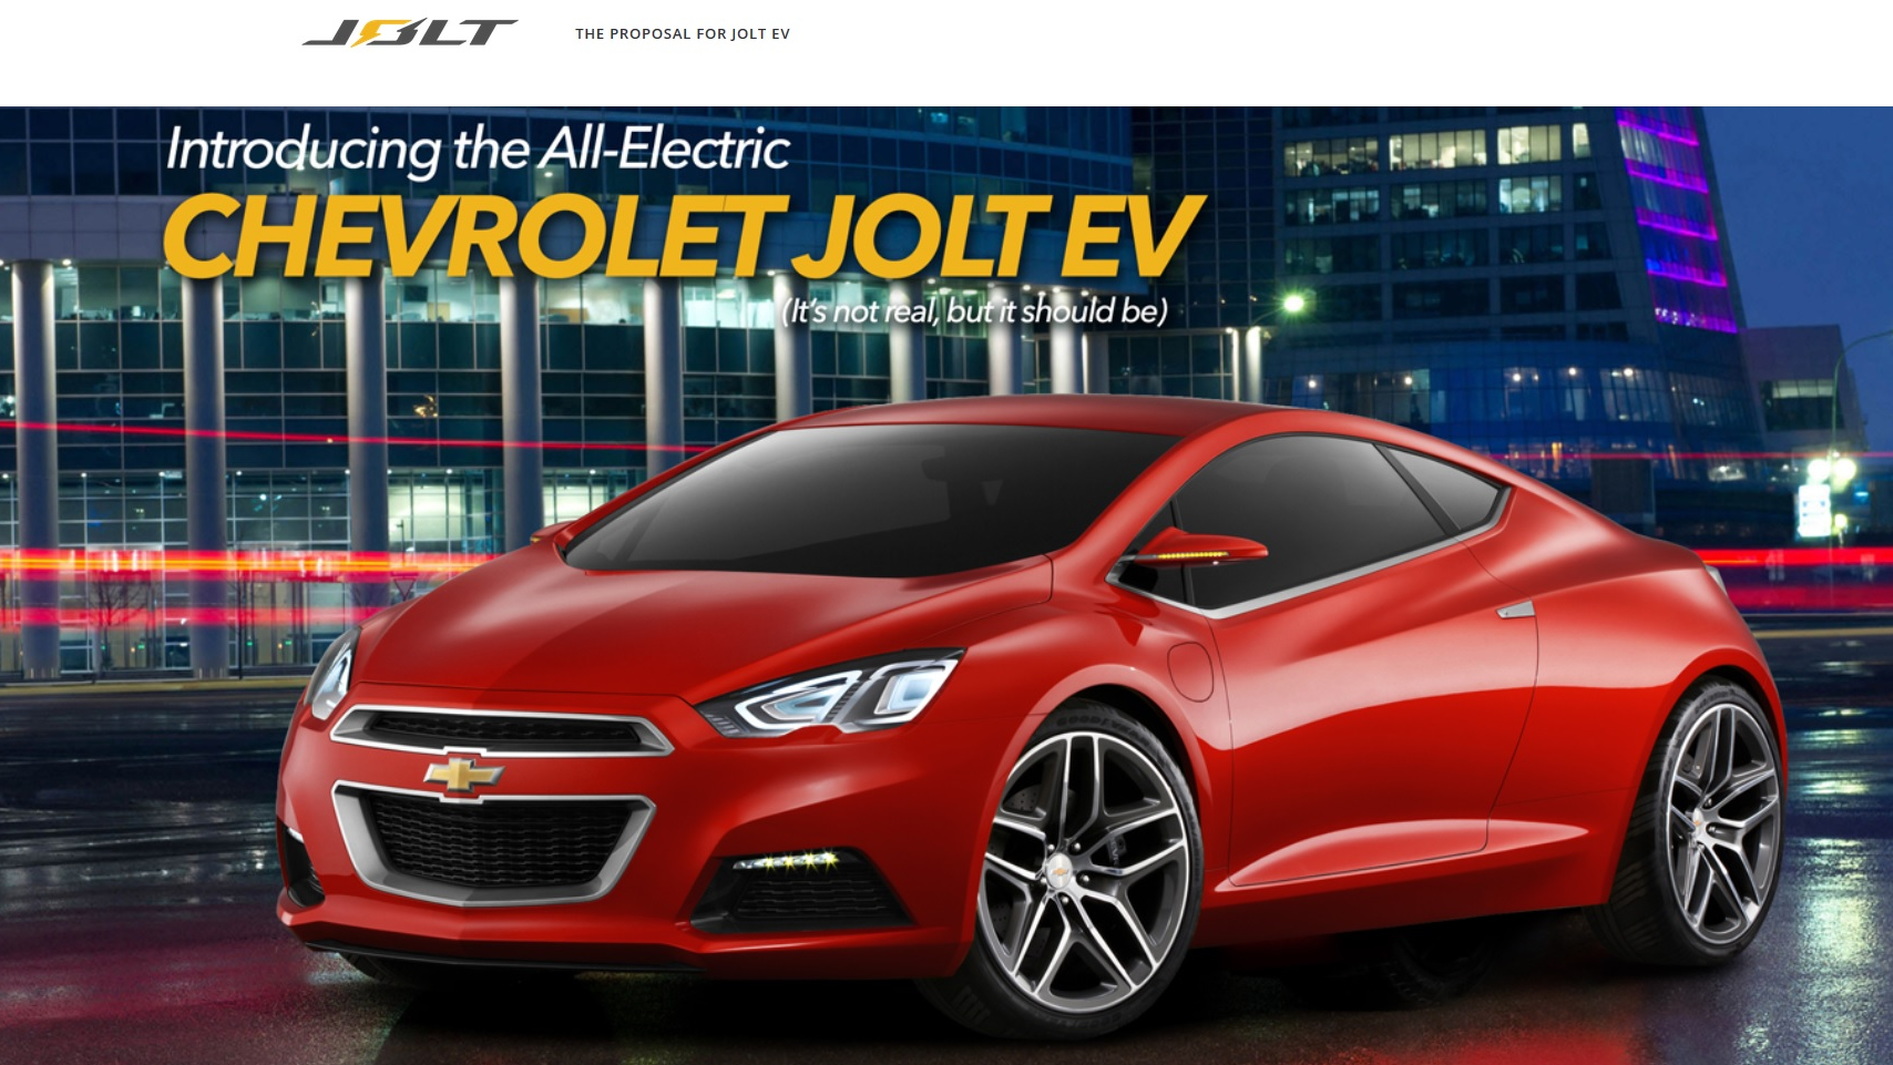 Image of supposed Chevrolet Jolt EV electric coupe shown on ChevroletJoltEV.com website, May 2016